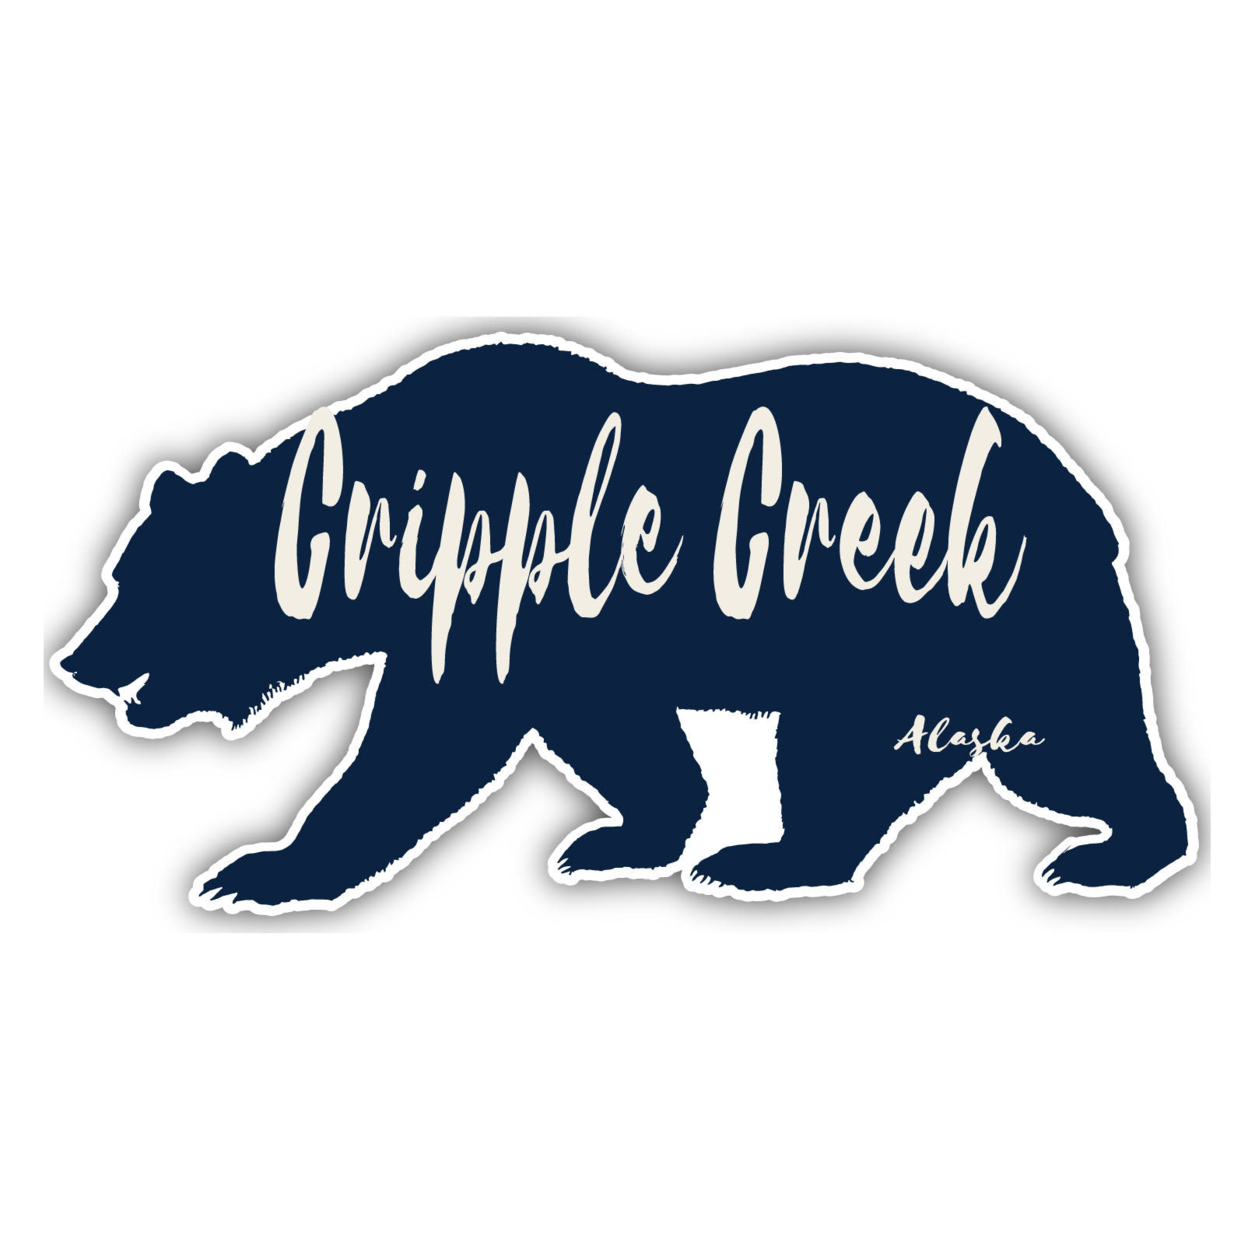 Cripple Creek Alaska Souvenir Decorative Stickers (Choose Theme And Size) - Single Unit, 8-Inch, Bear